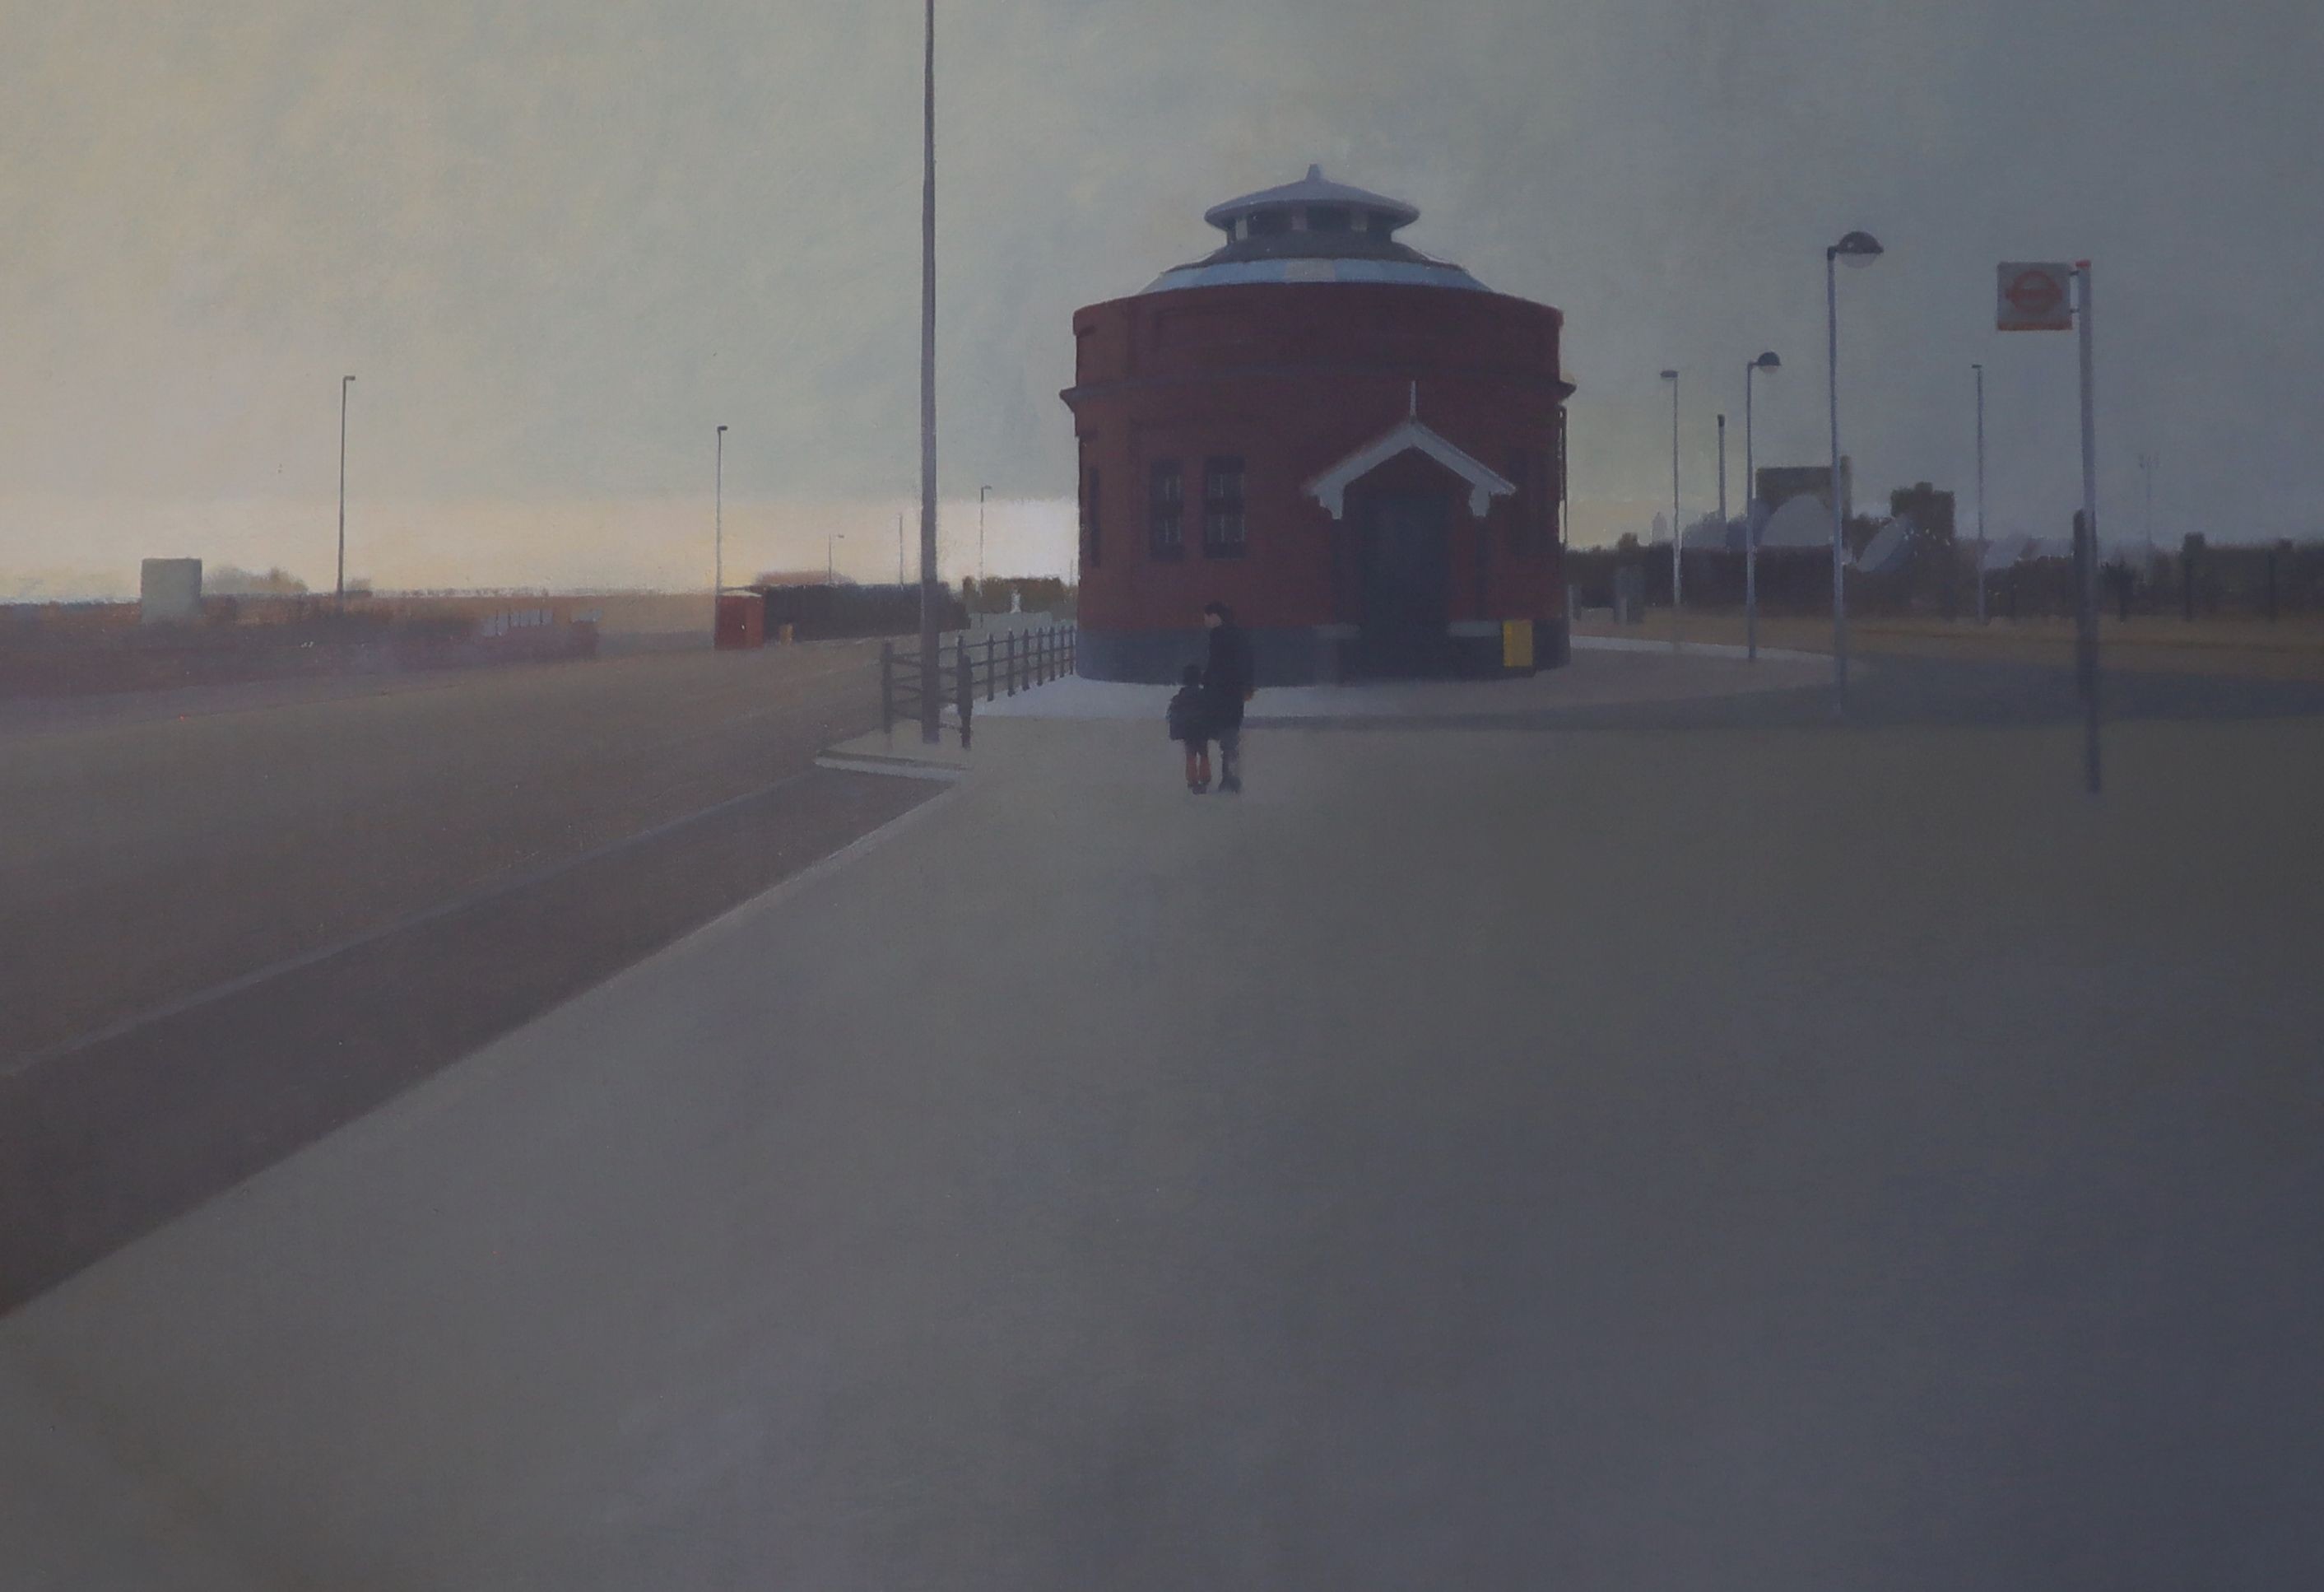 Peter Kelly R.B.A. (1931-2019), 'The Rotunda, Woolwich', oil on canvas, 42 x 61cm.                                                                                                                                          